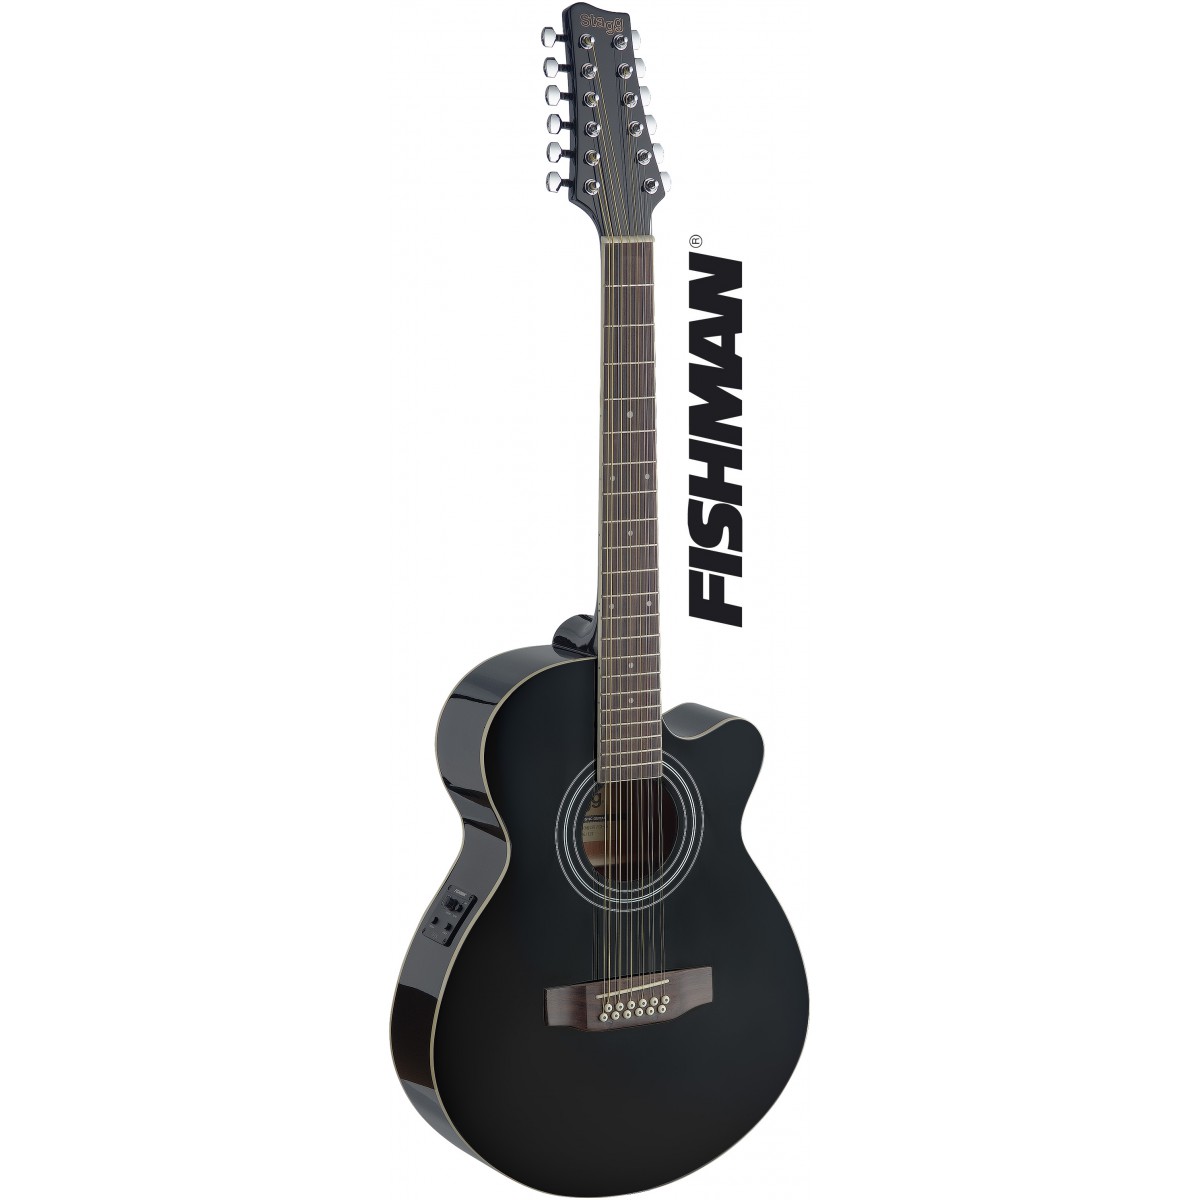 Elektroakustická kytara Mini Jumbo 12-ti strunná s elektronikou FISHMAN, BK